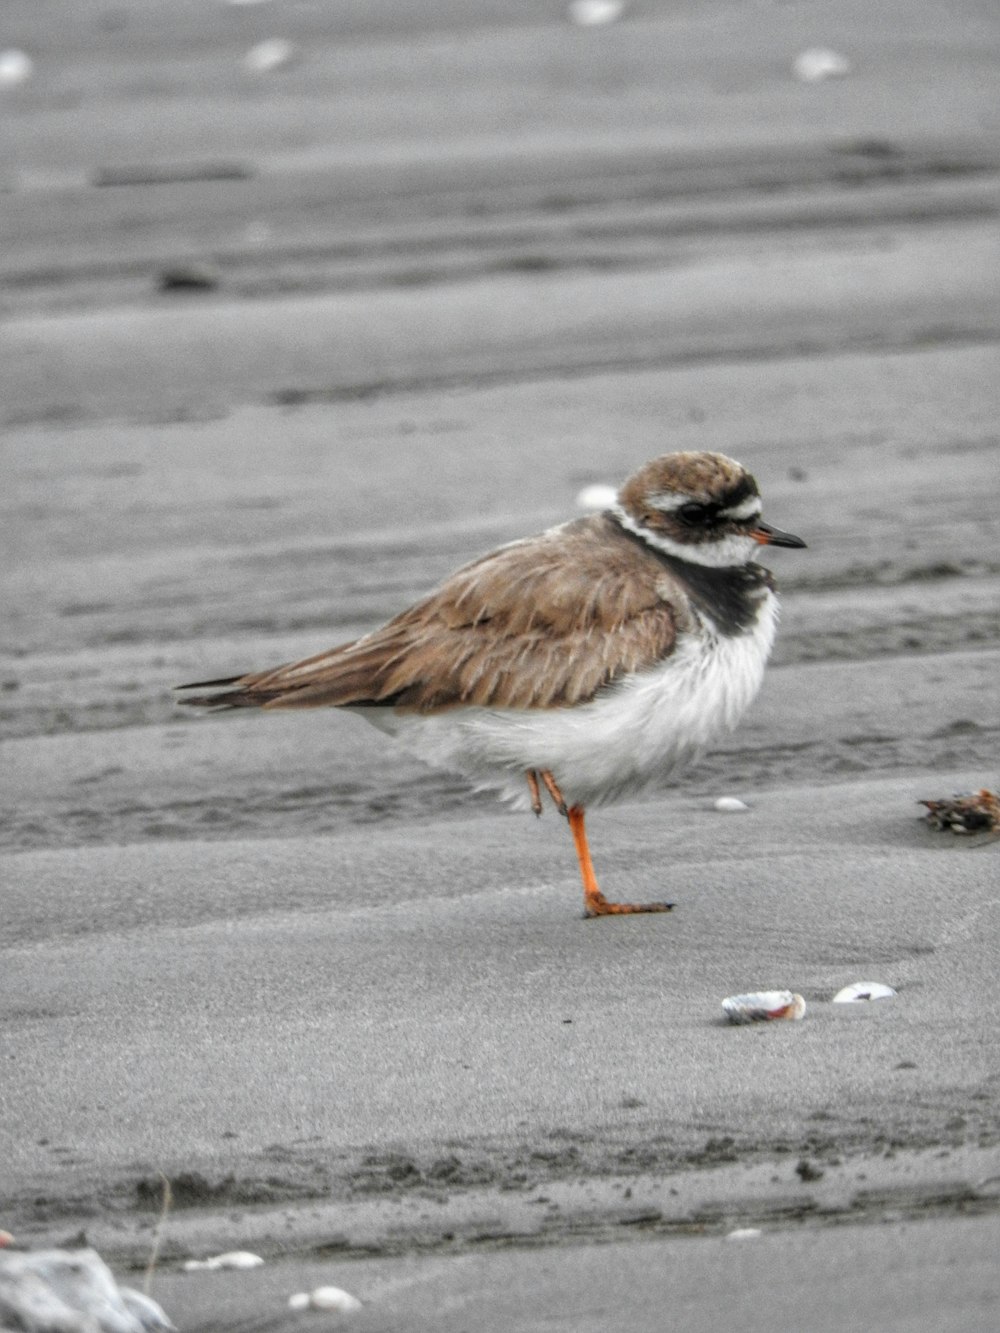 a bird standing on a beach next to trash